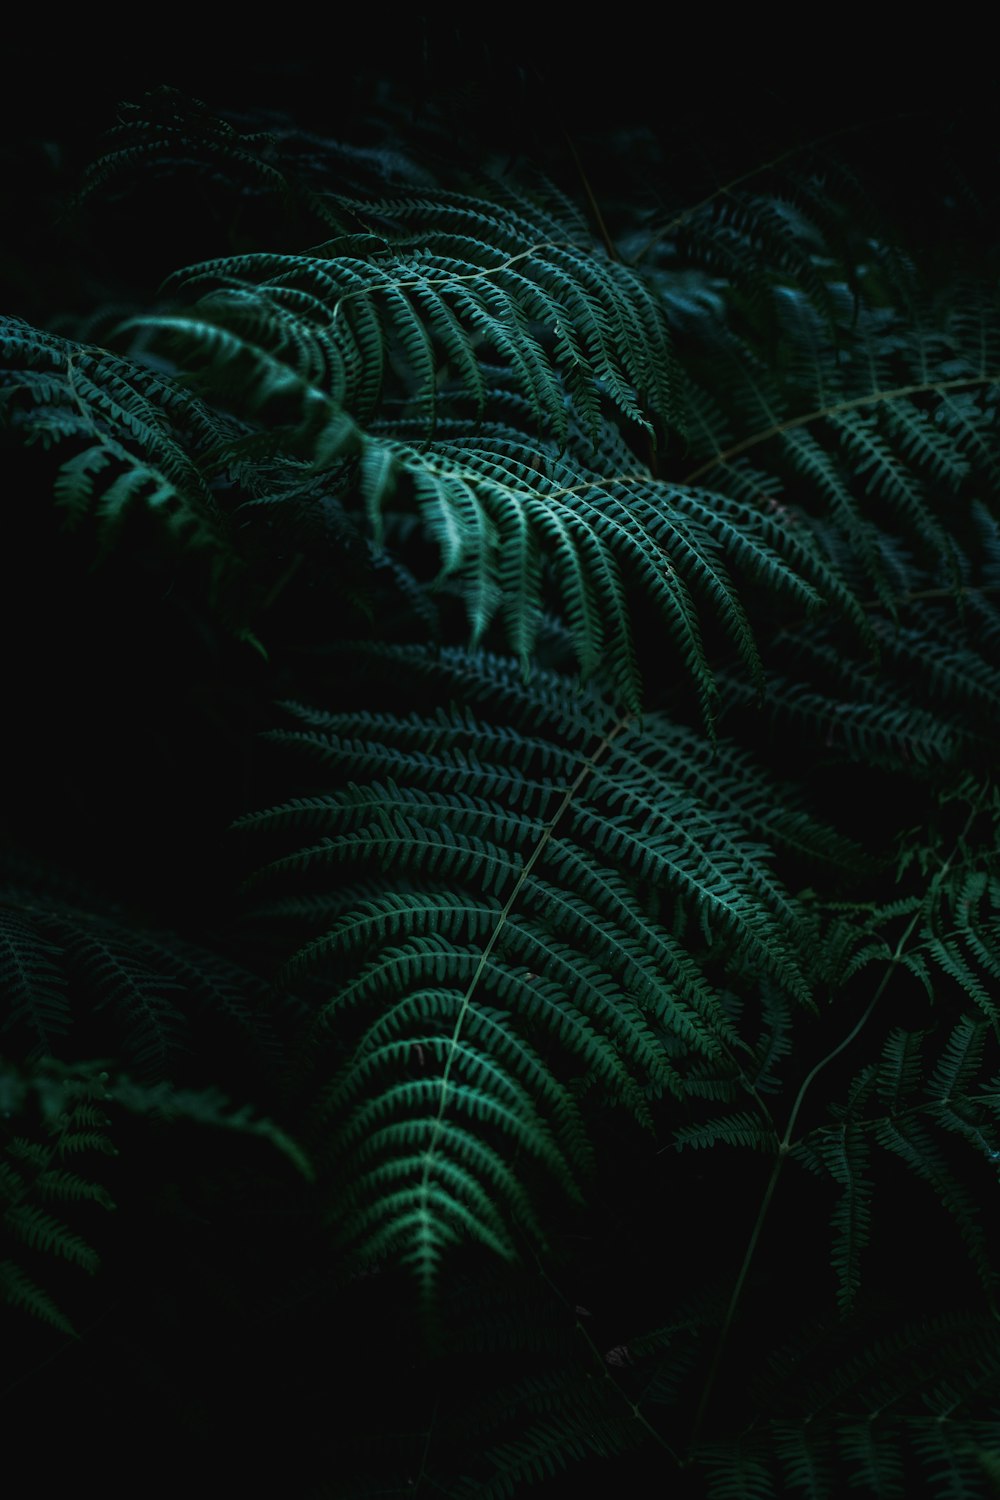 green fern plant in dark room